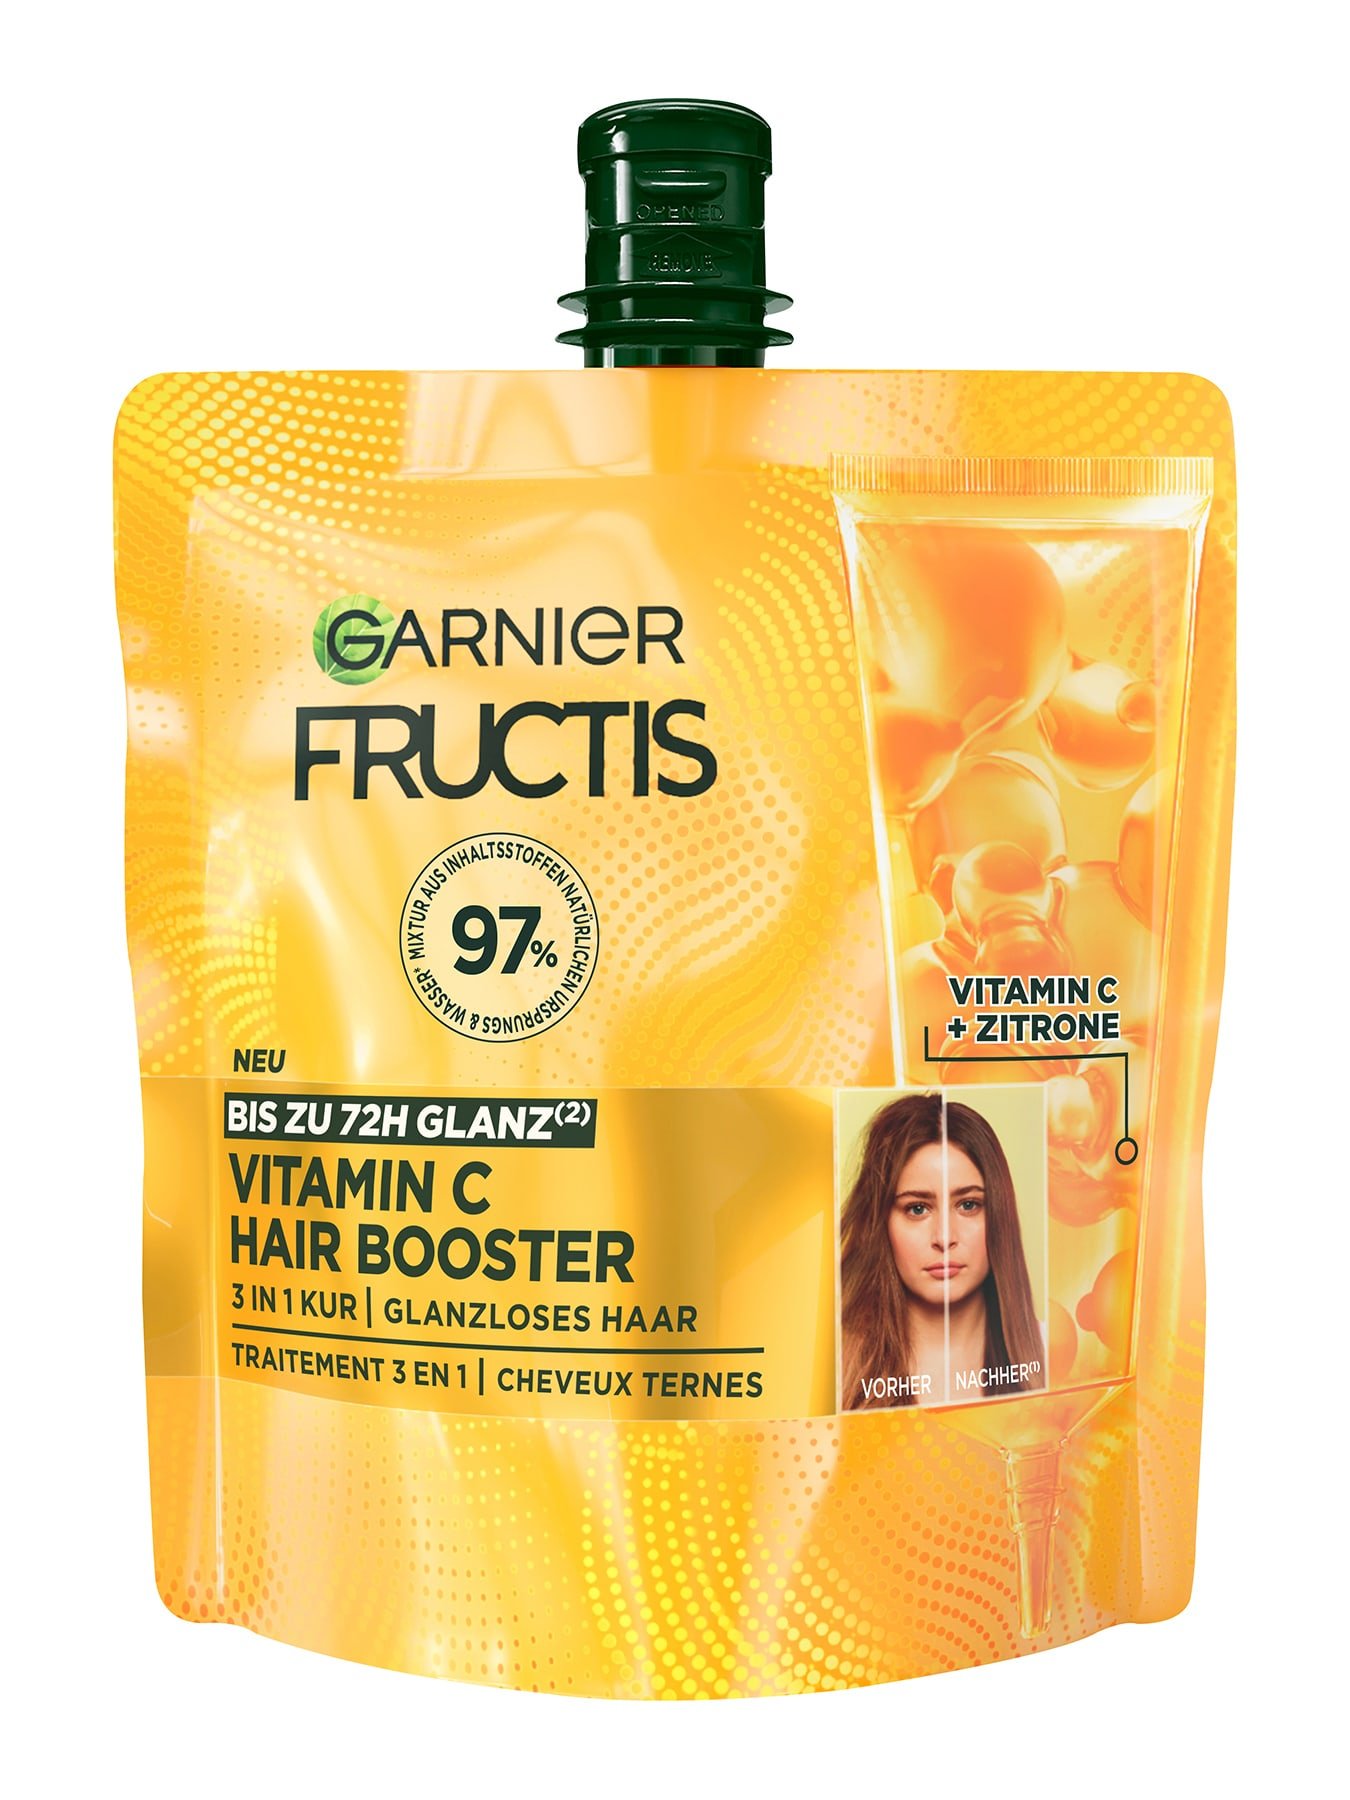 Garnier Fructis Hair Booster Vitamin C Produktverpackung vorne